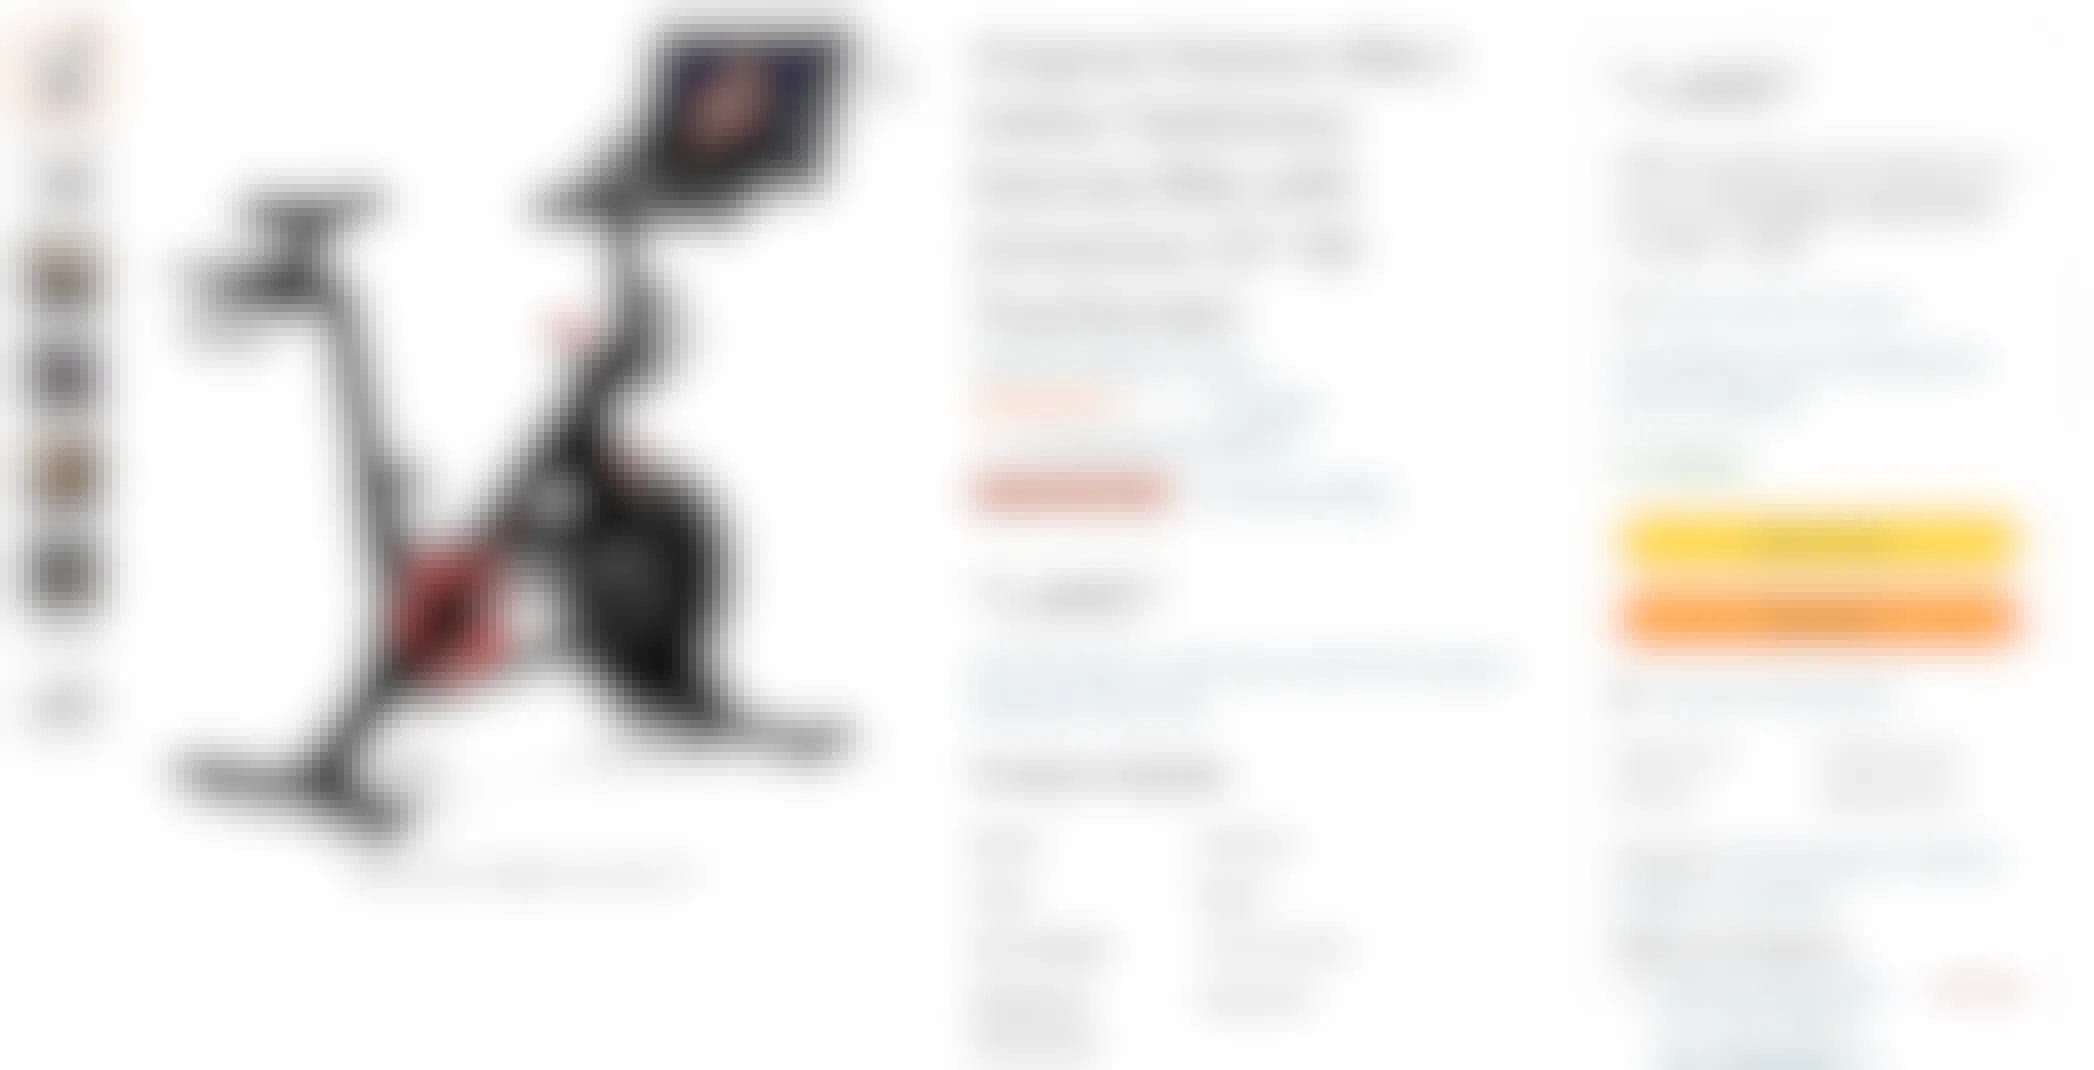 A screenshot of a Peloton bike product page on Amazon.